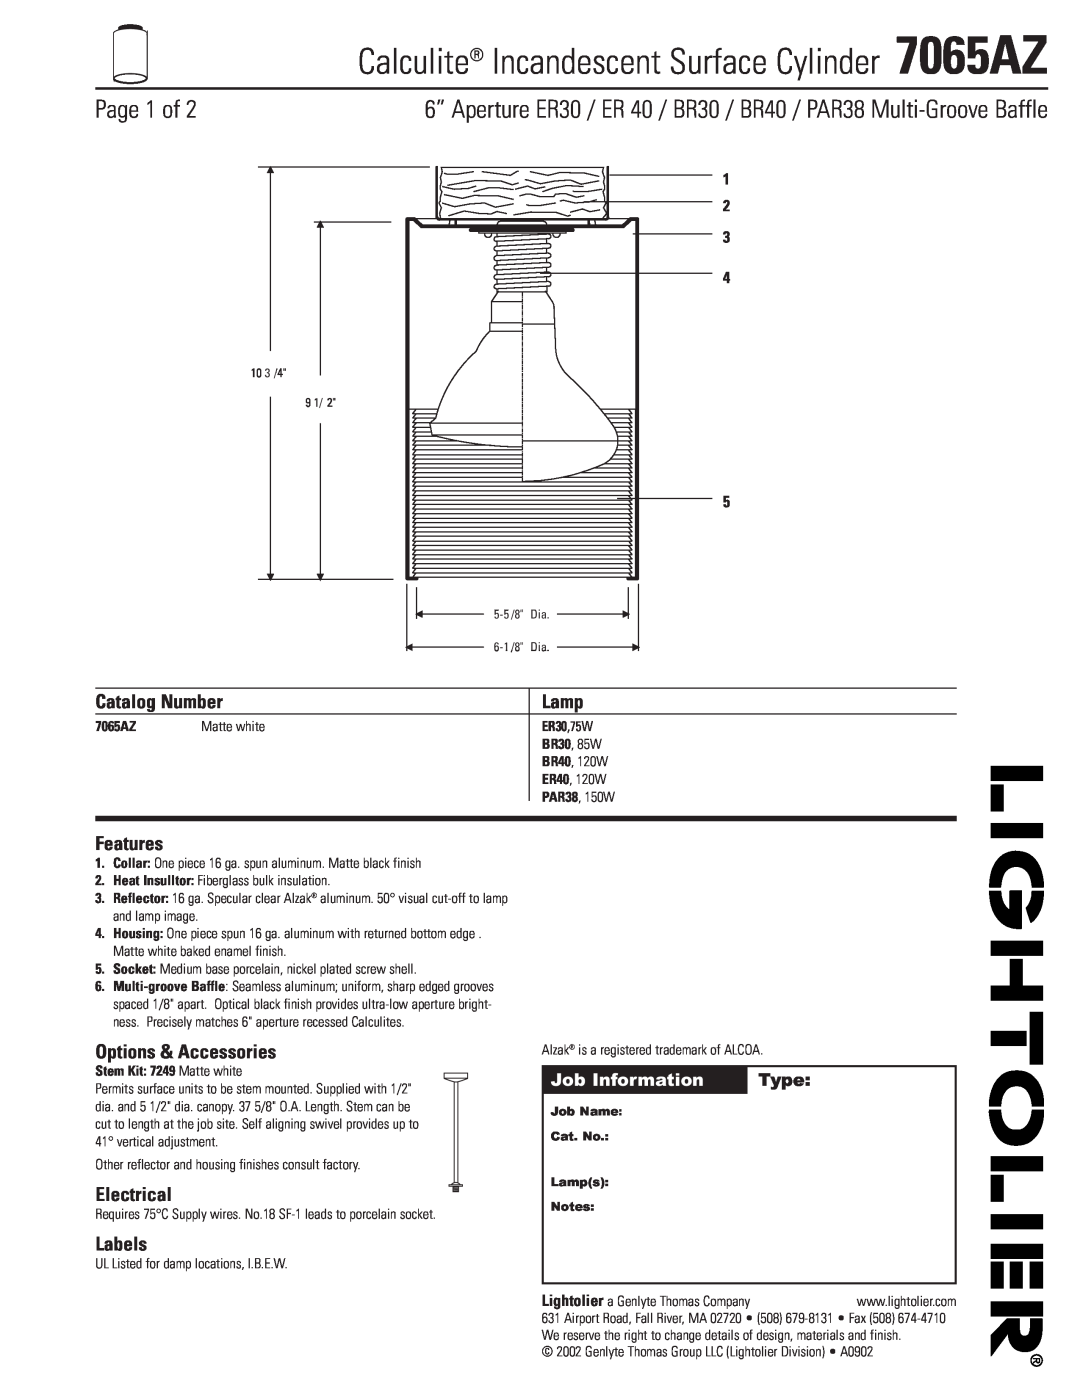 Lightolier manual Calculite Incandescent Surface Cylinder 7065AZ, Page 1 of, Job Information, Type, Catalog Number 